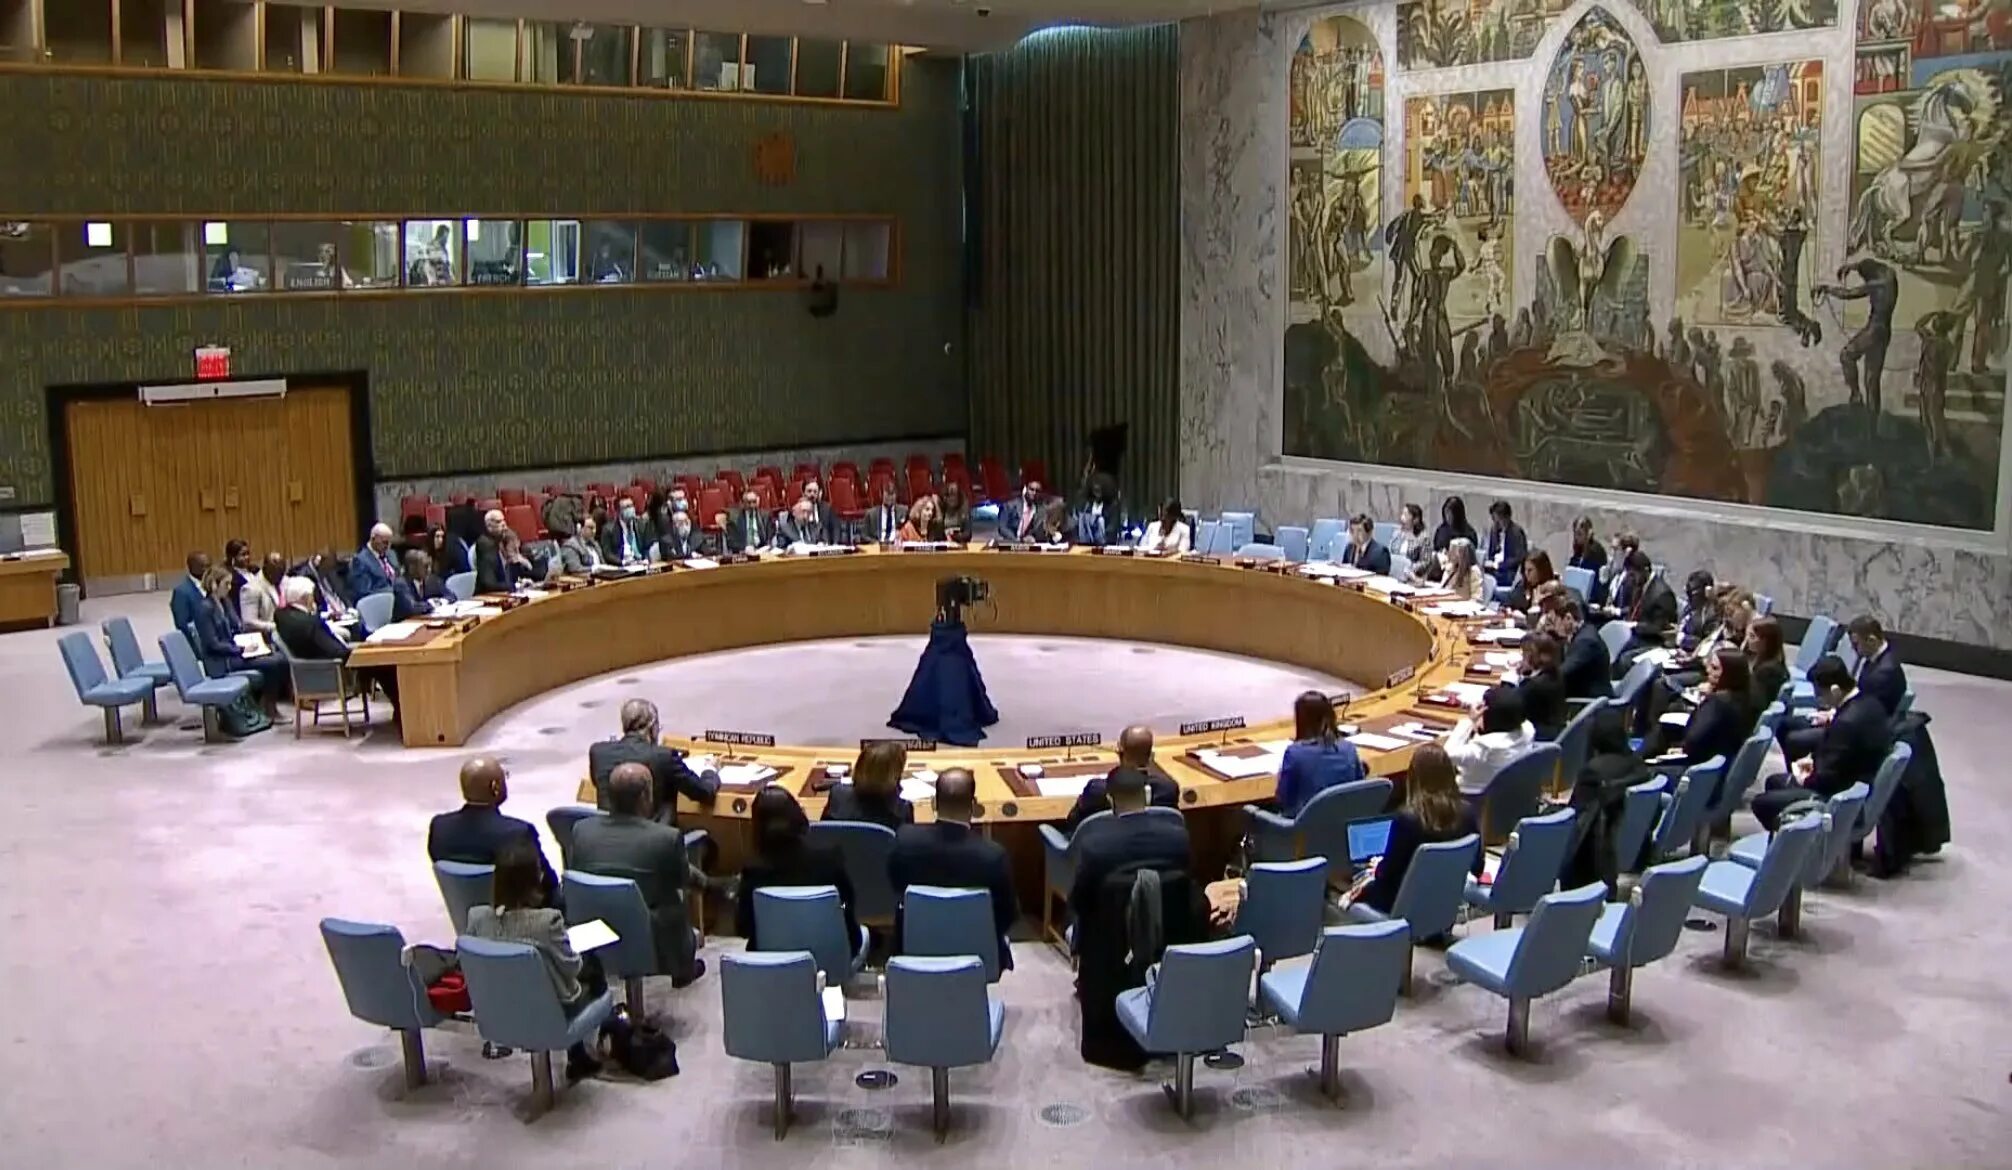 Заседание оон по украине. Совет безопасности ООН 2023. Совет безопасности ООН (сб). Генеральная Ассамблея ООН 2023. Зал заседаний ООН.